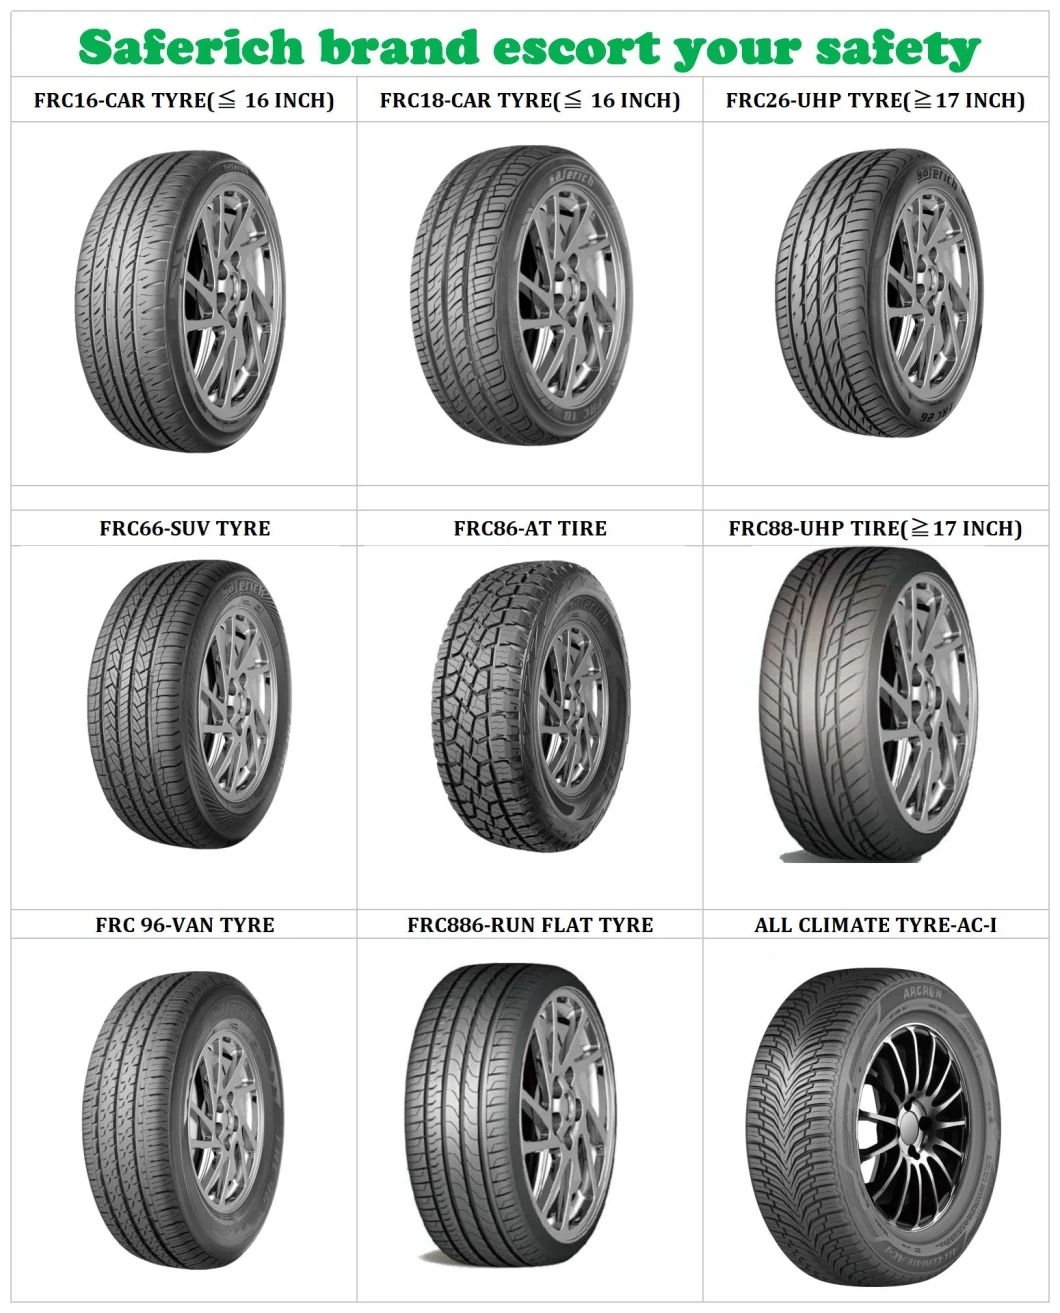 PCR Tire 165/65r13, PC Car Tire, Passenger Car Tire, UHP Tire, SUV, Mt, at